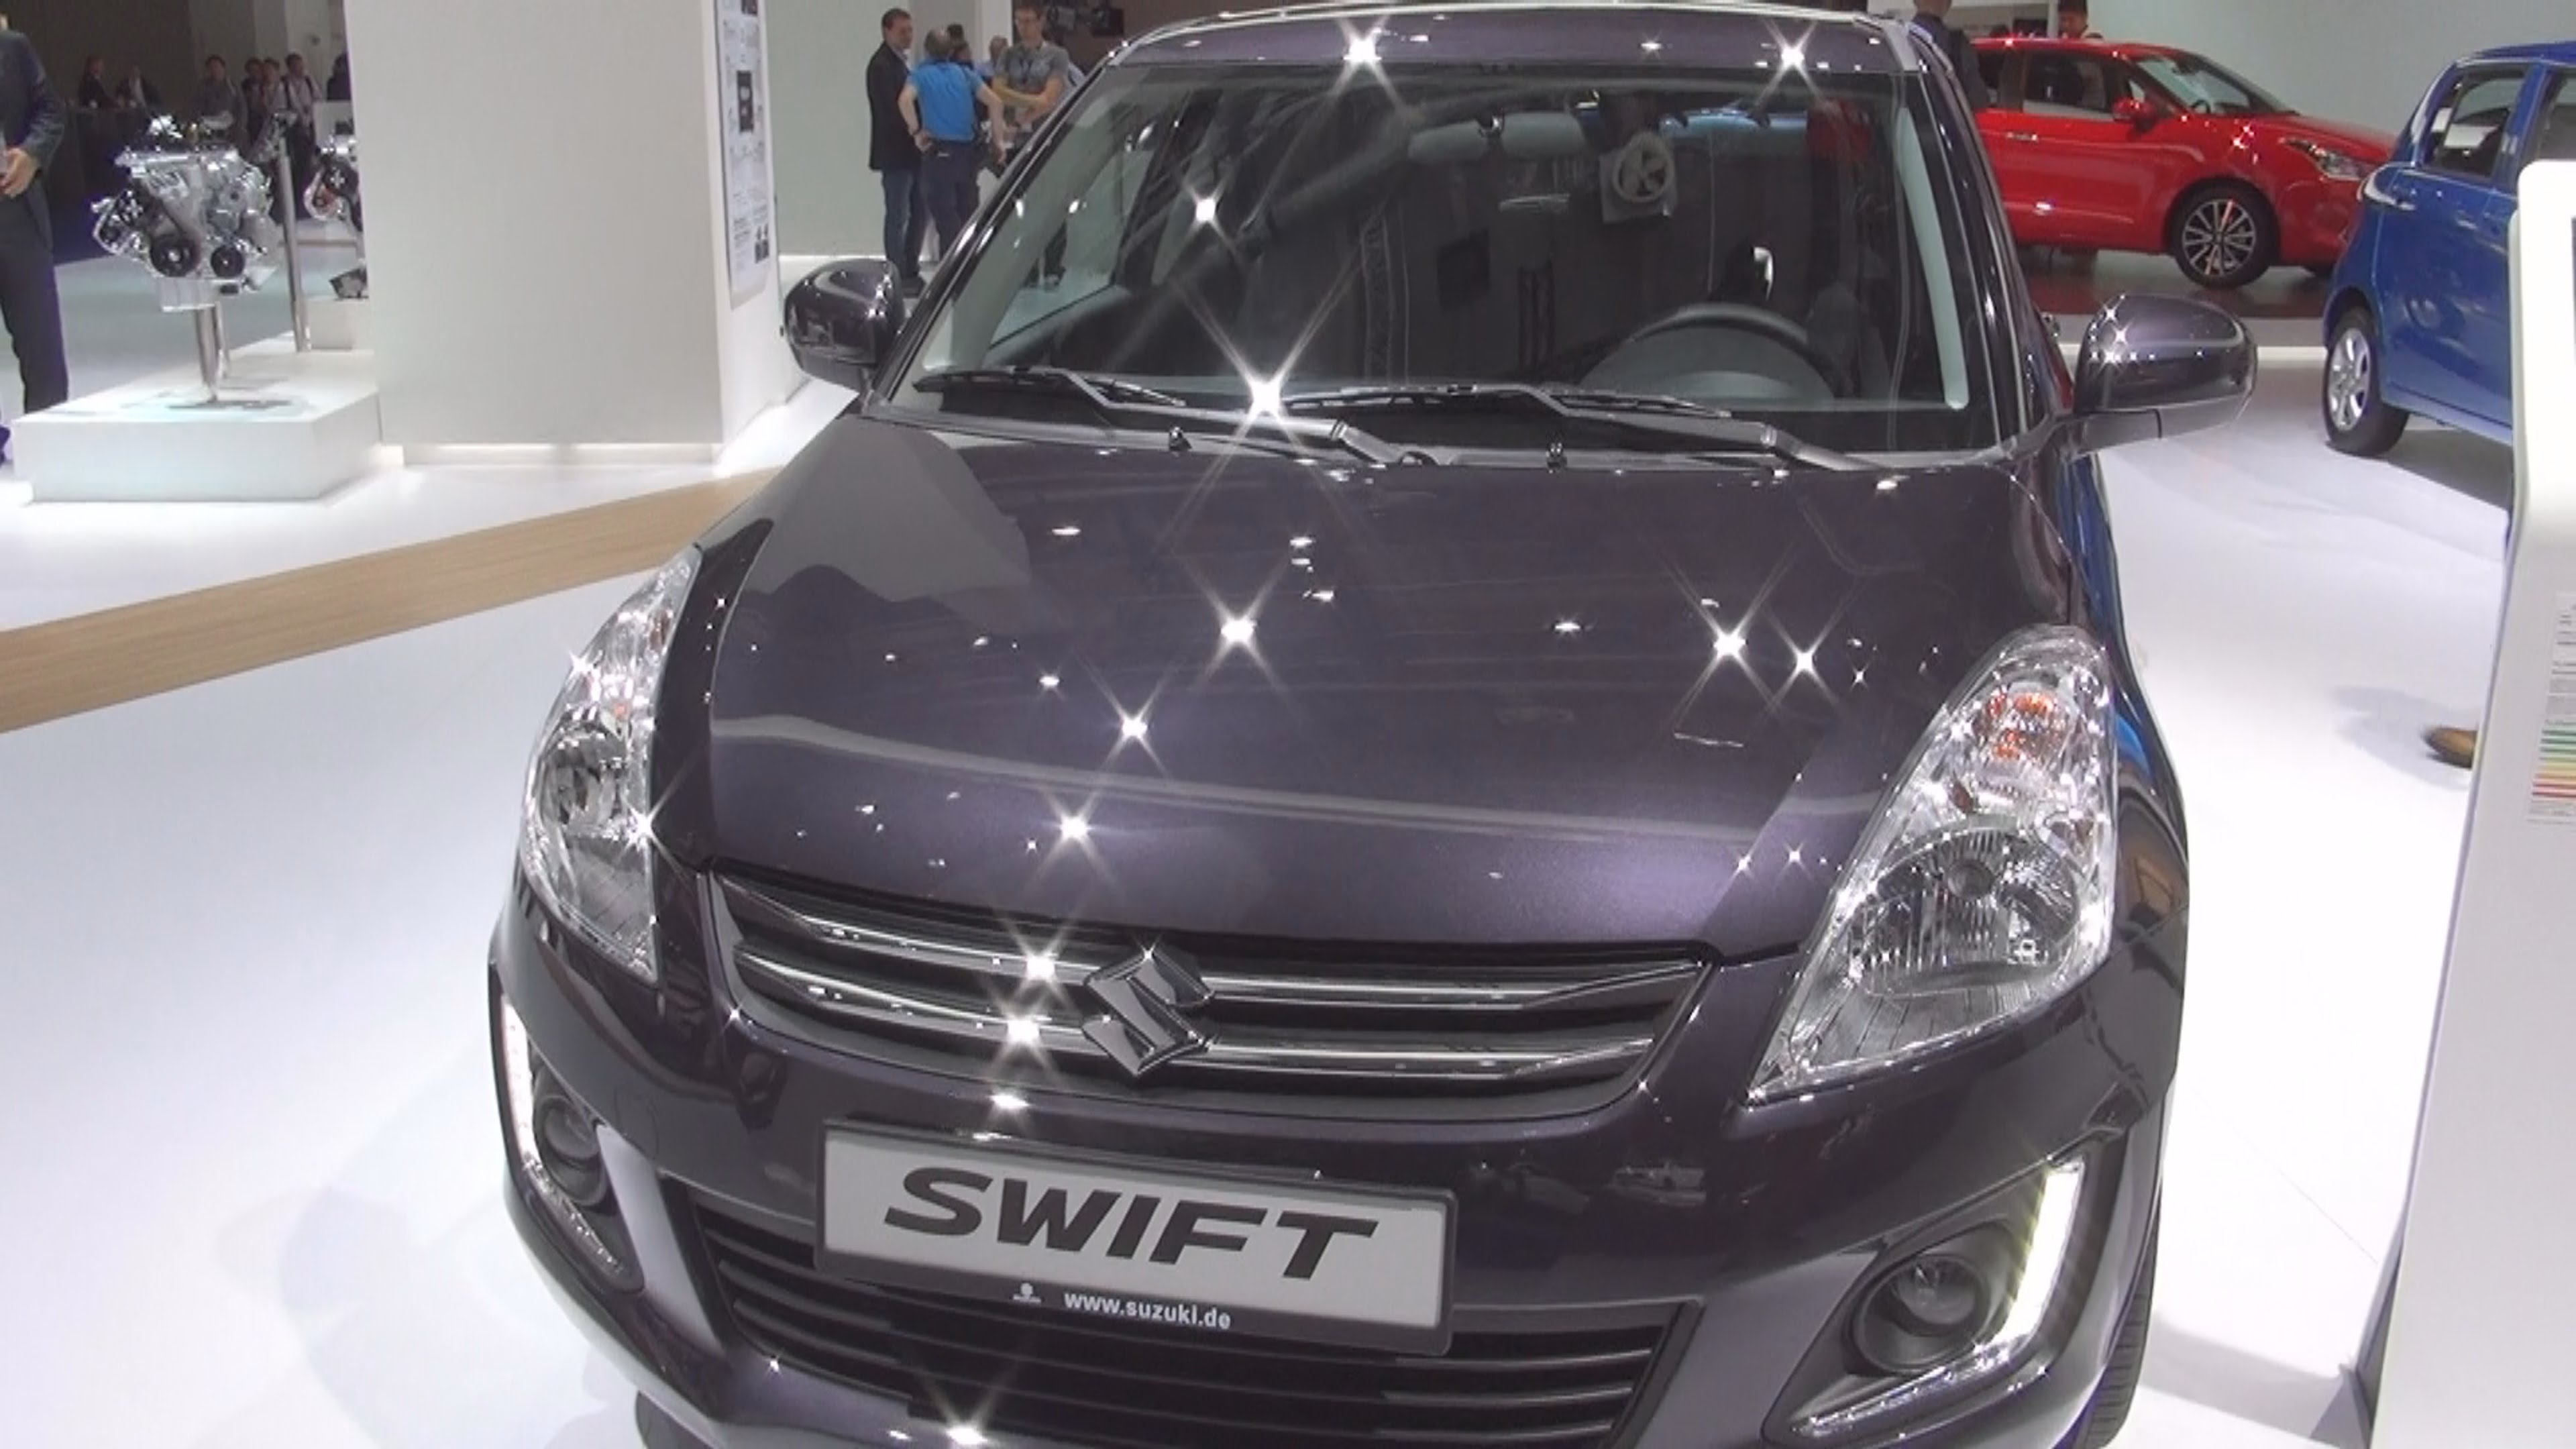 Suzuki Ignis hd model